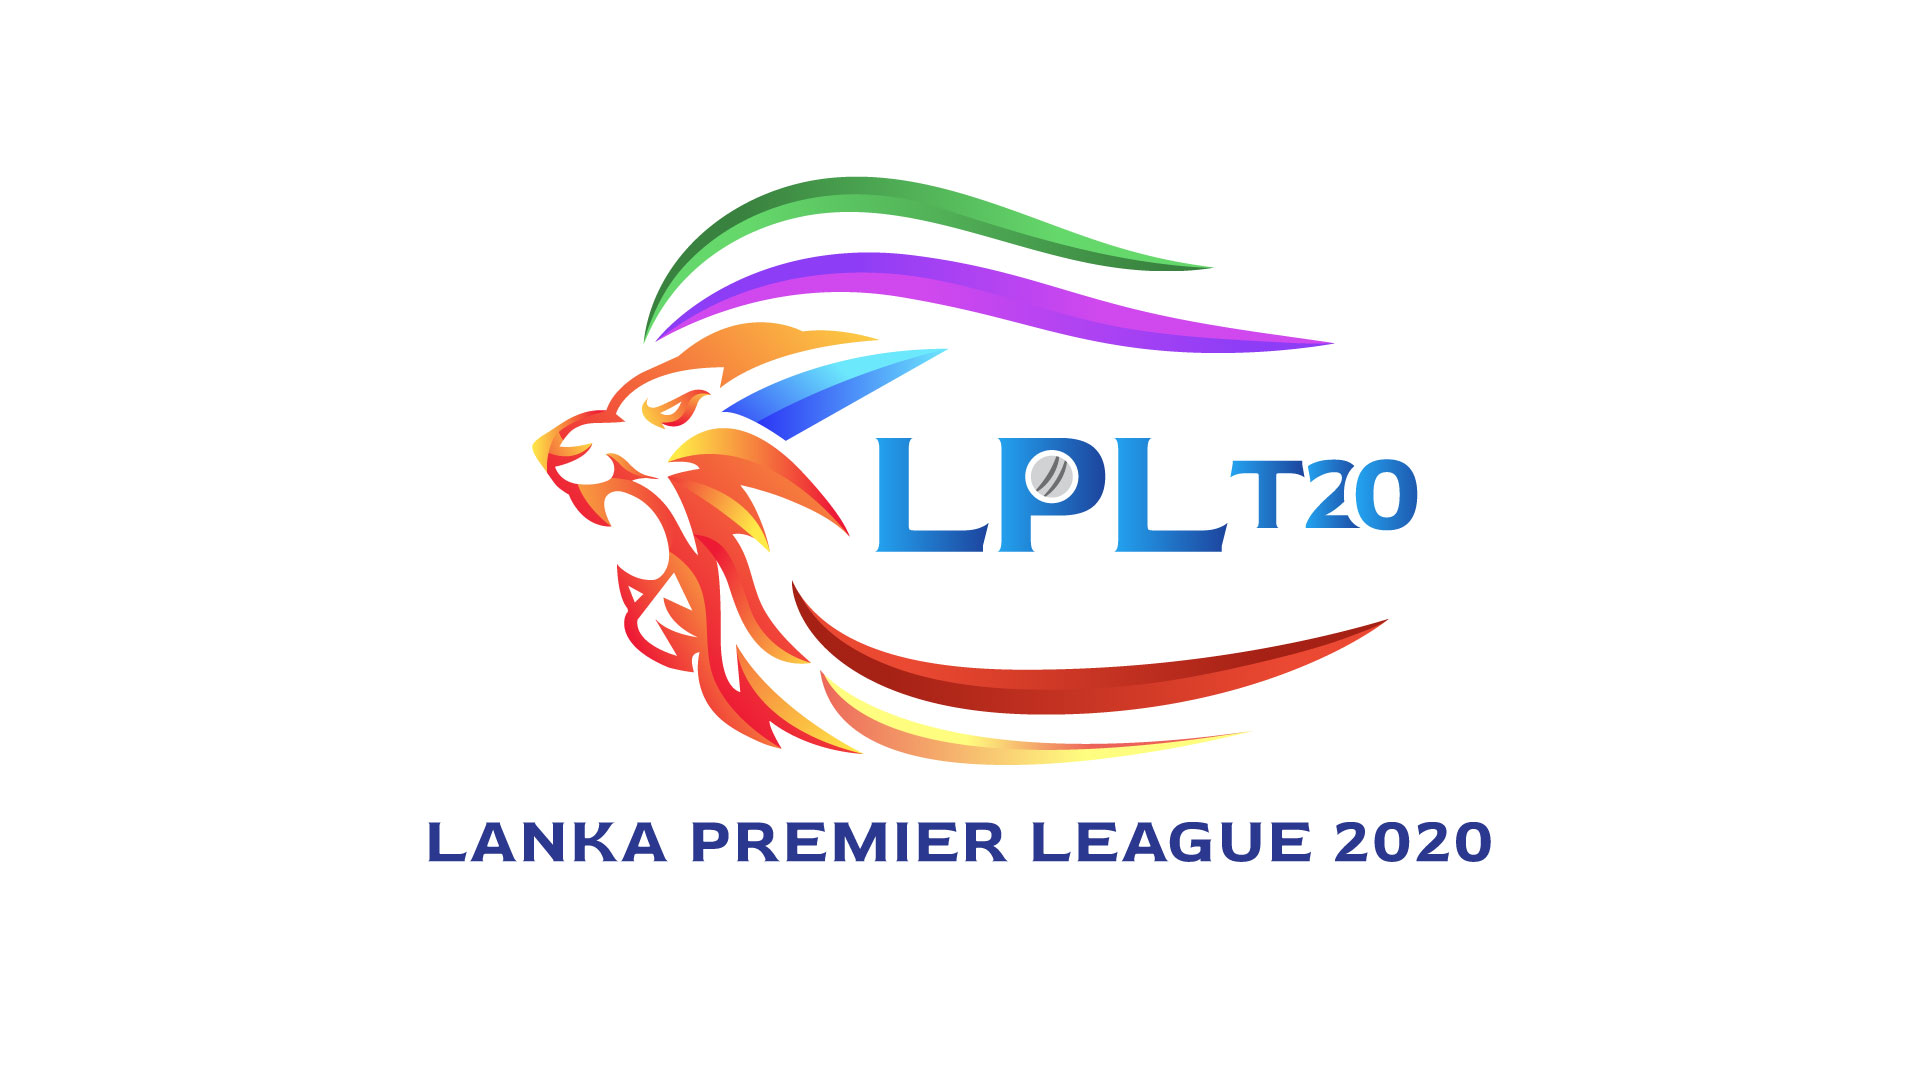 Galaxy of global stars to descend in Sri Lanka for LPL